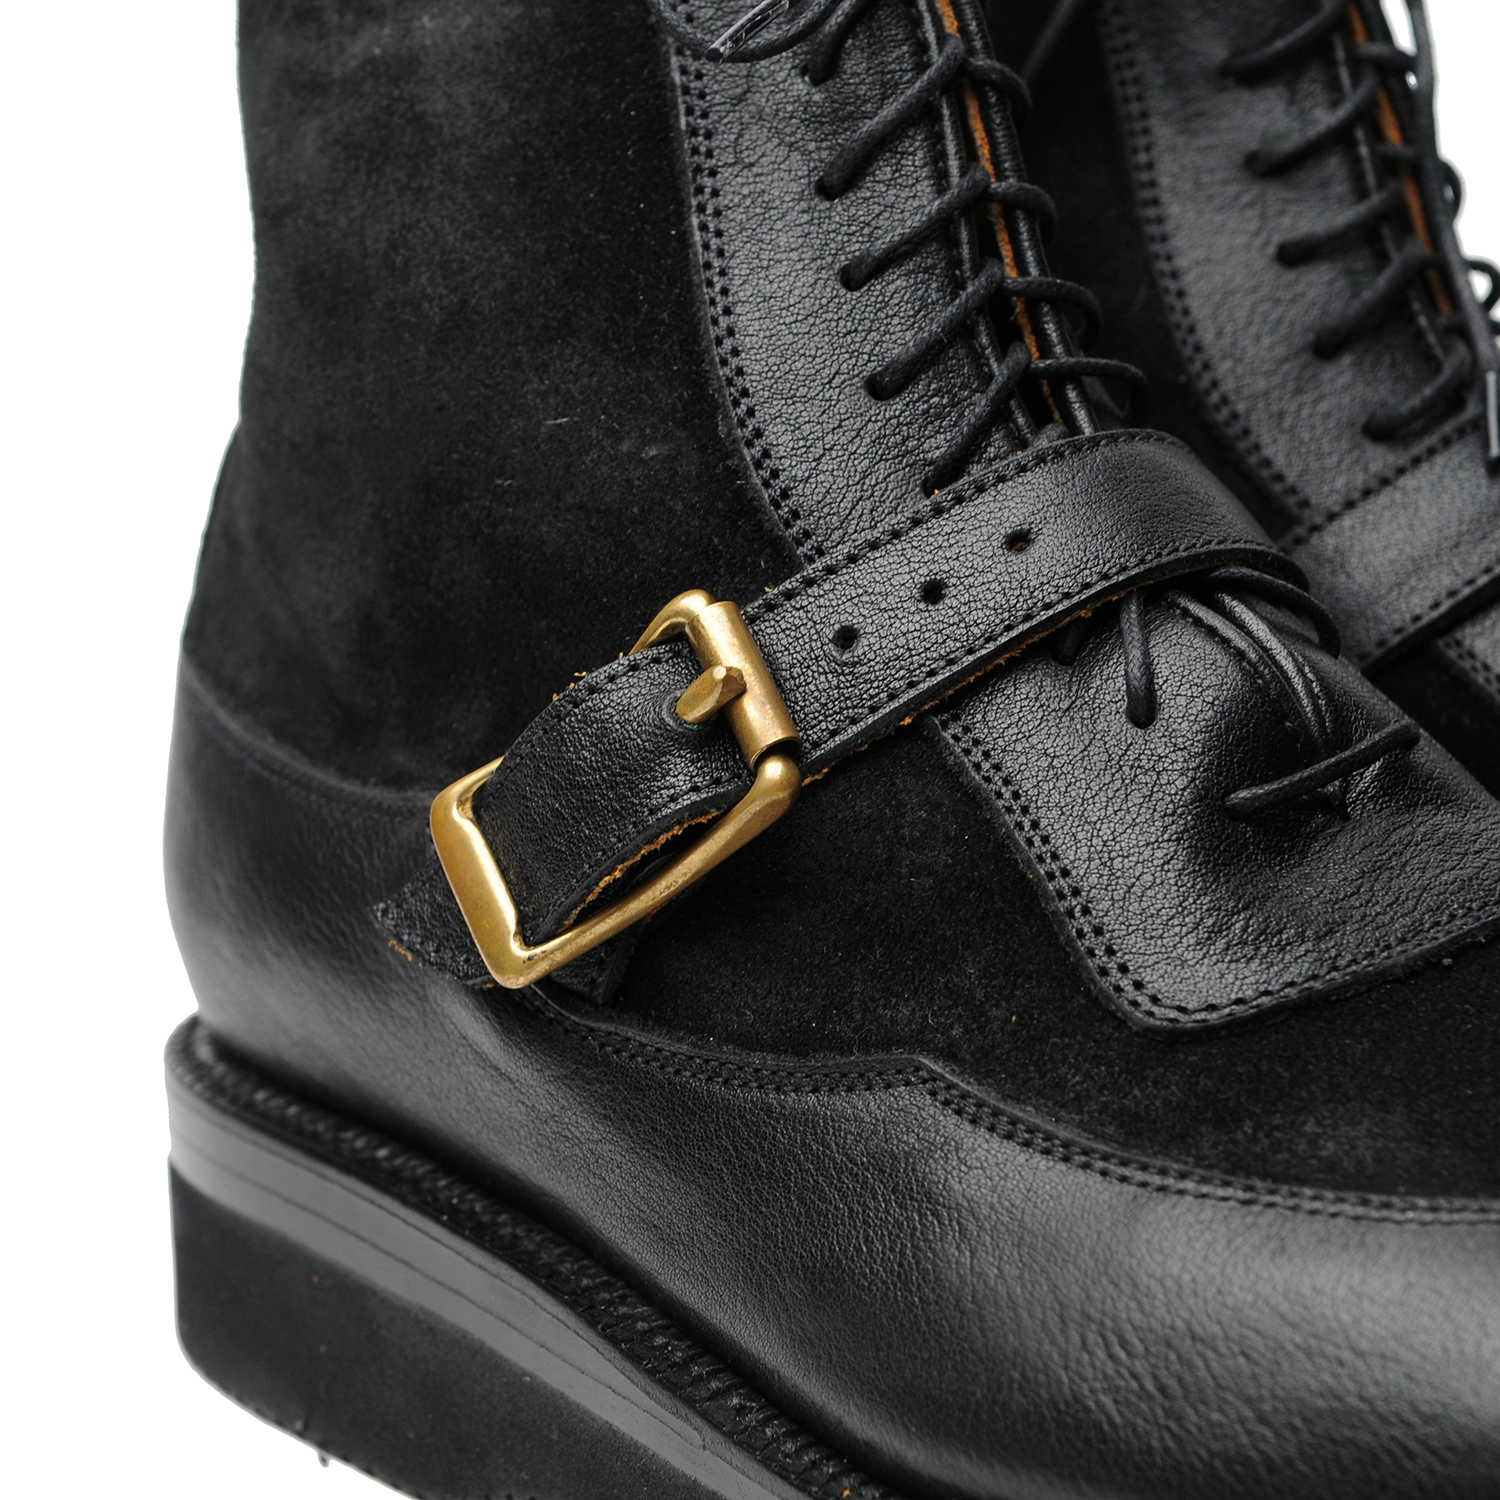 sierra-boots-w-strap-mc-black-x-black-suede-close-up.jpg